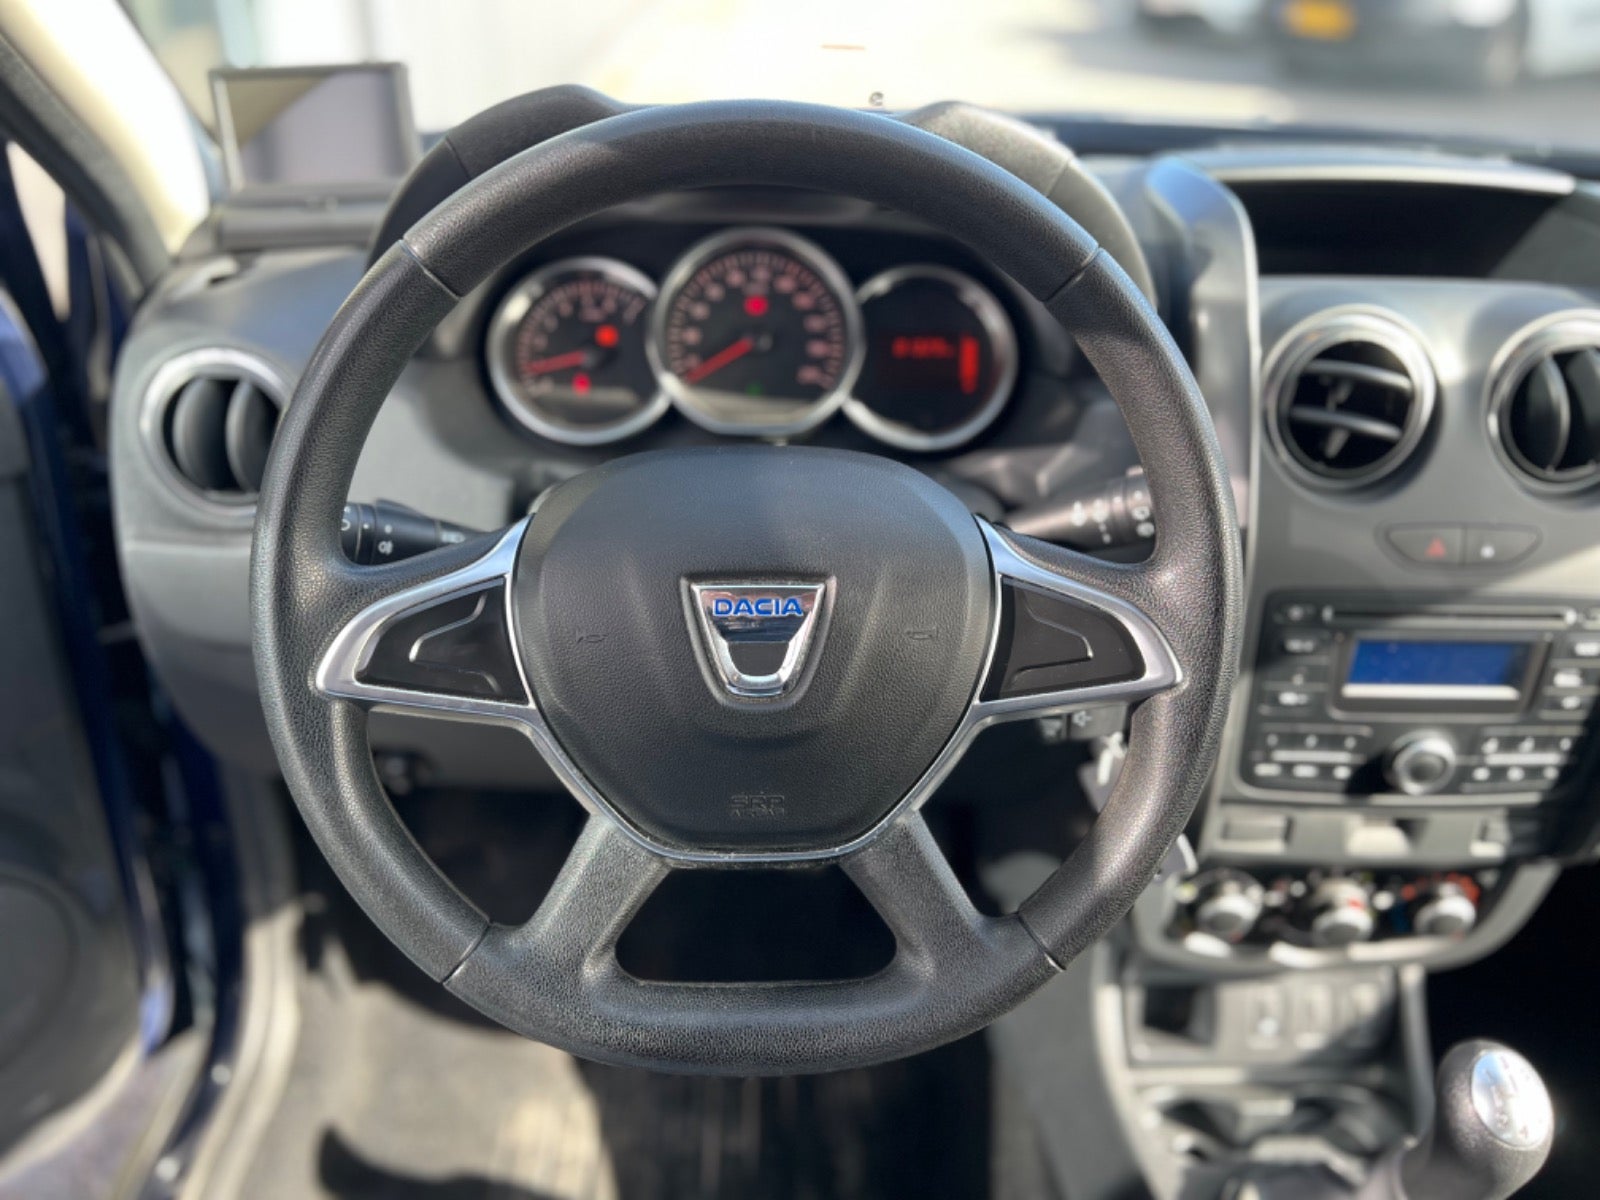 Dacia Duster 2017